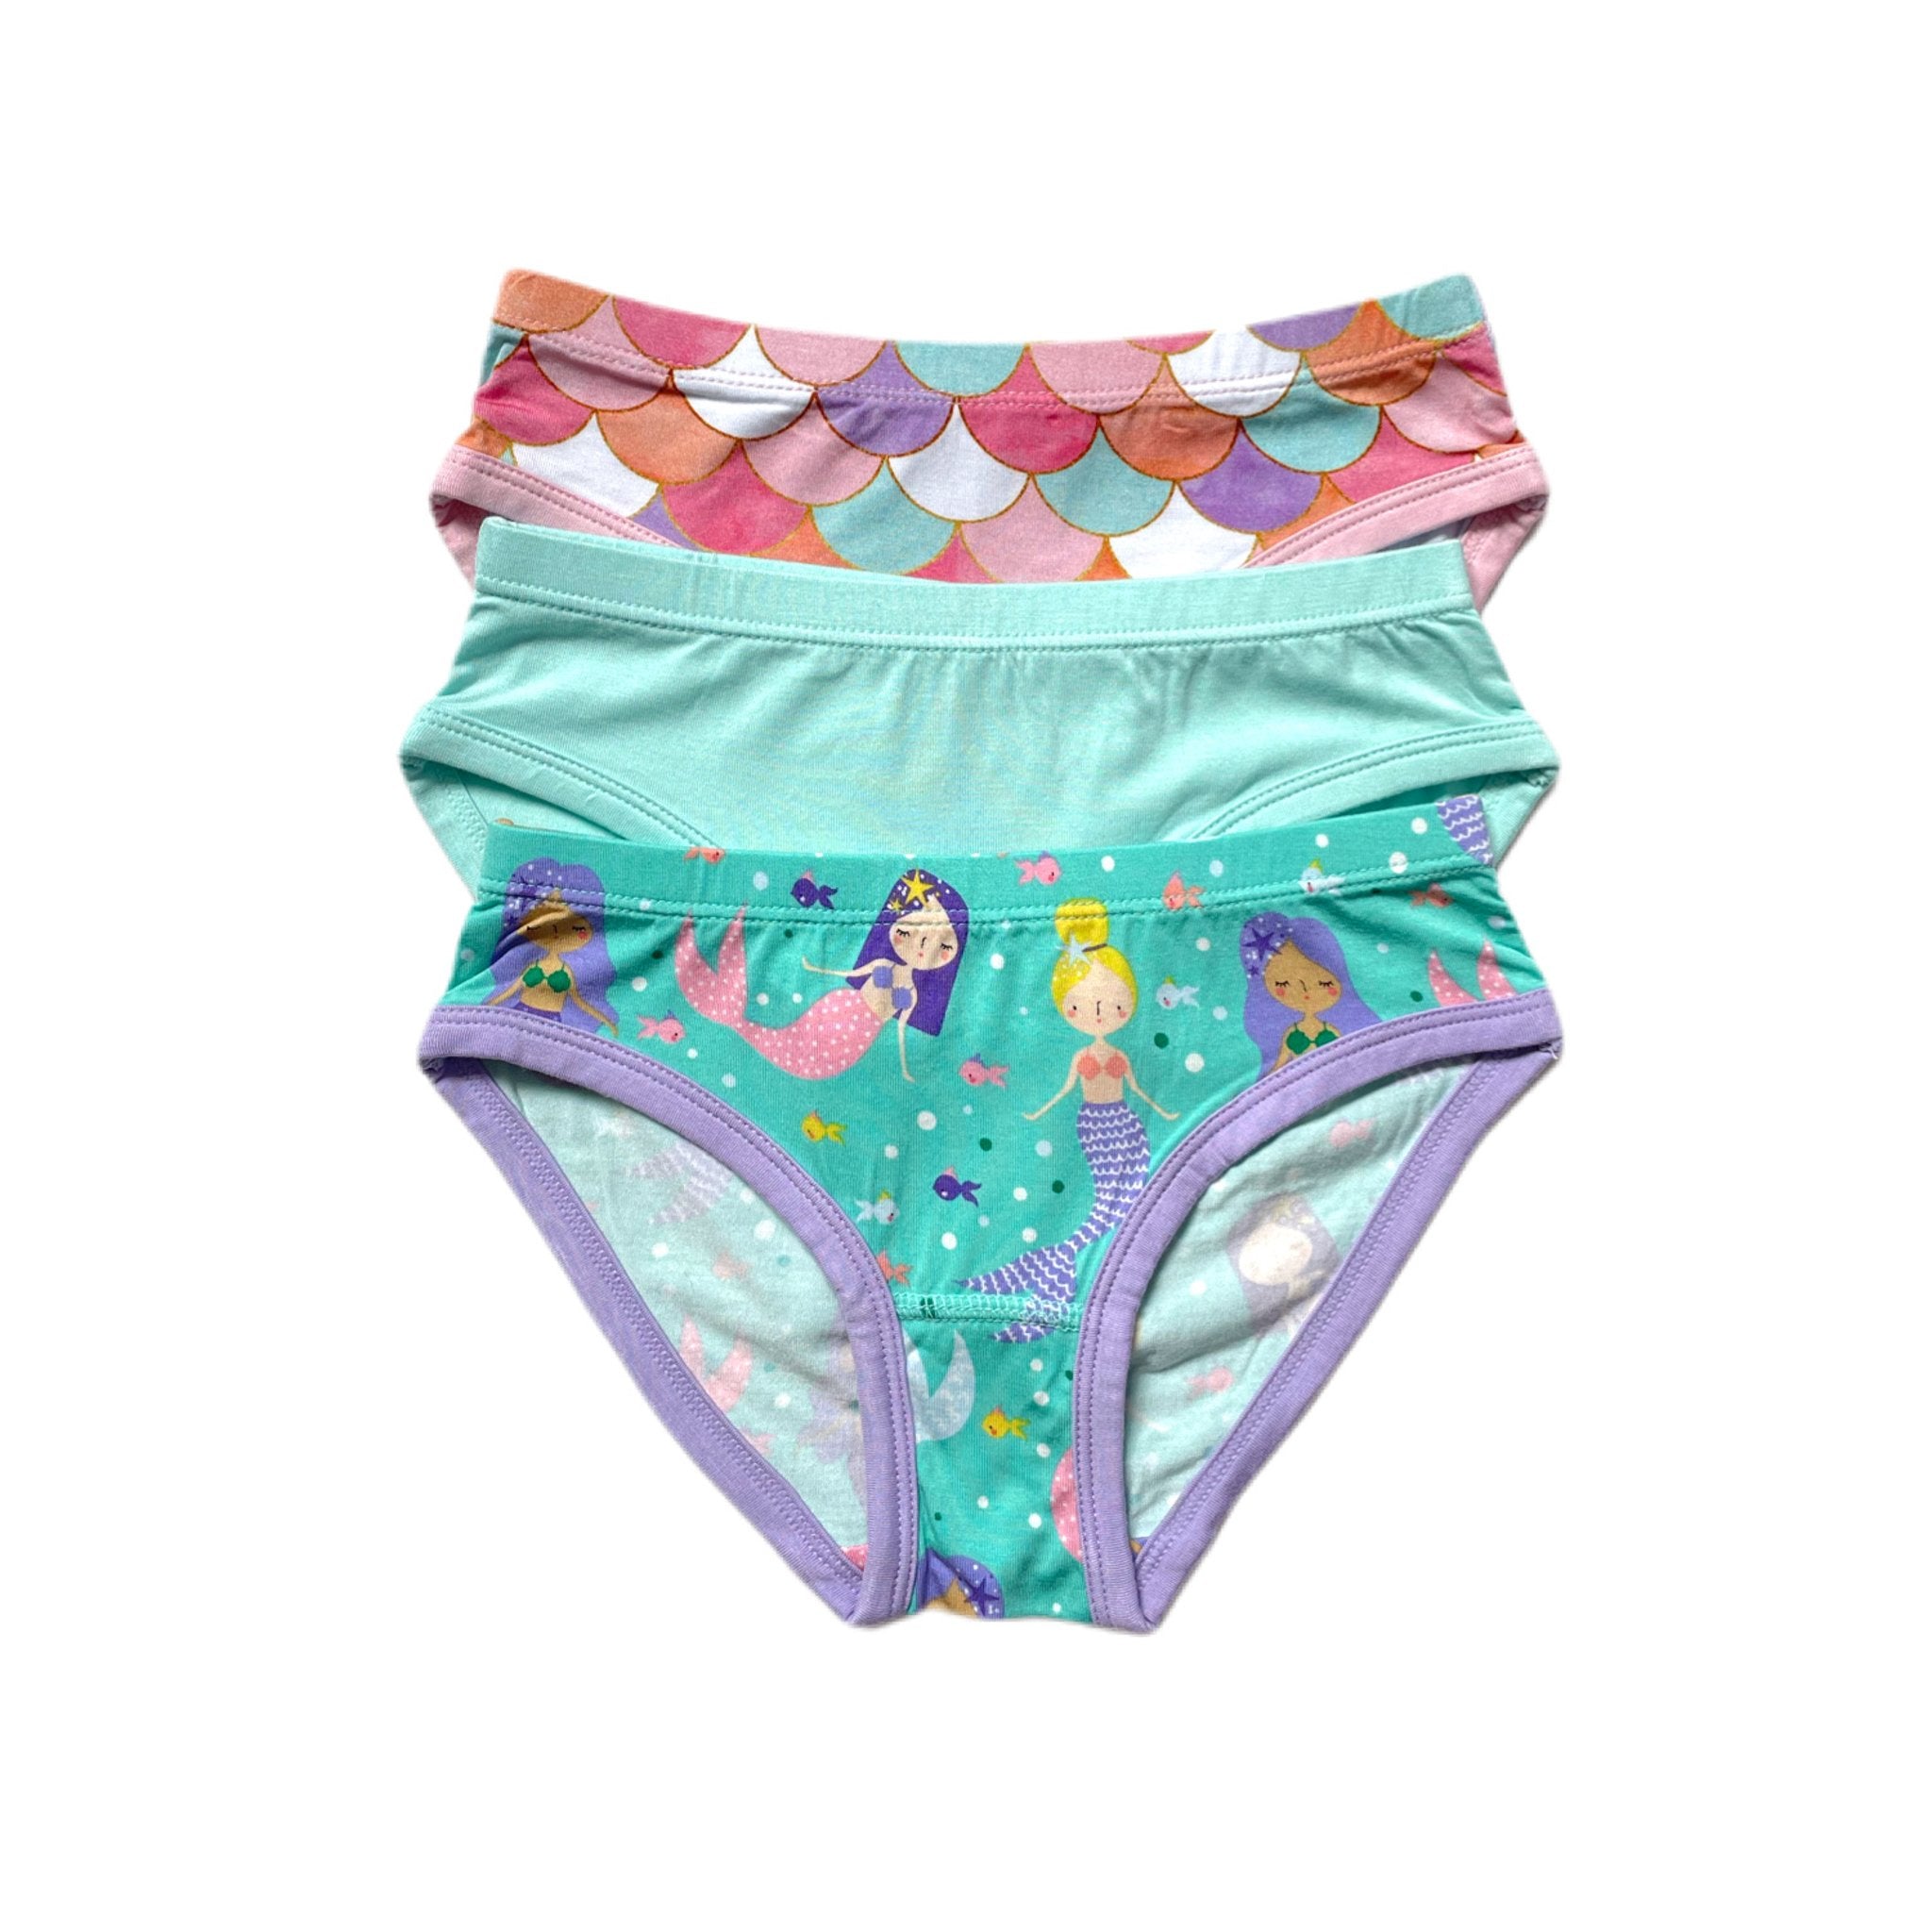 Mermaid Magic Girl's Bamboo Viscose Brief Underwear - 3 Pack